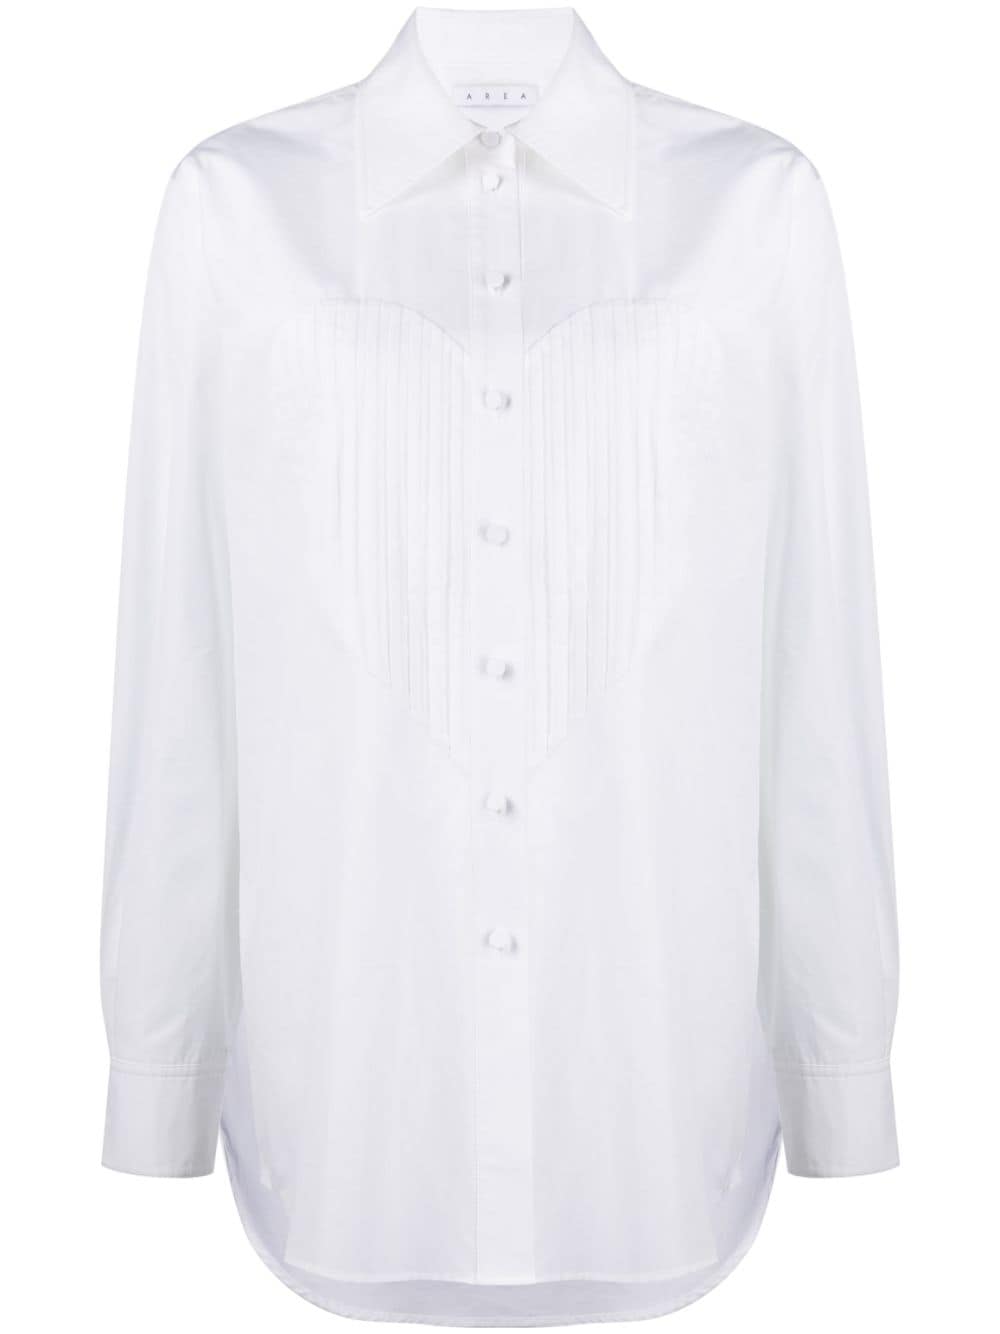 AREA Heart-Bib Tuxedo cotton shirt - White von AREA